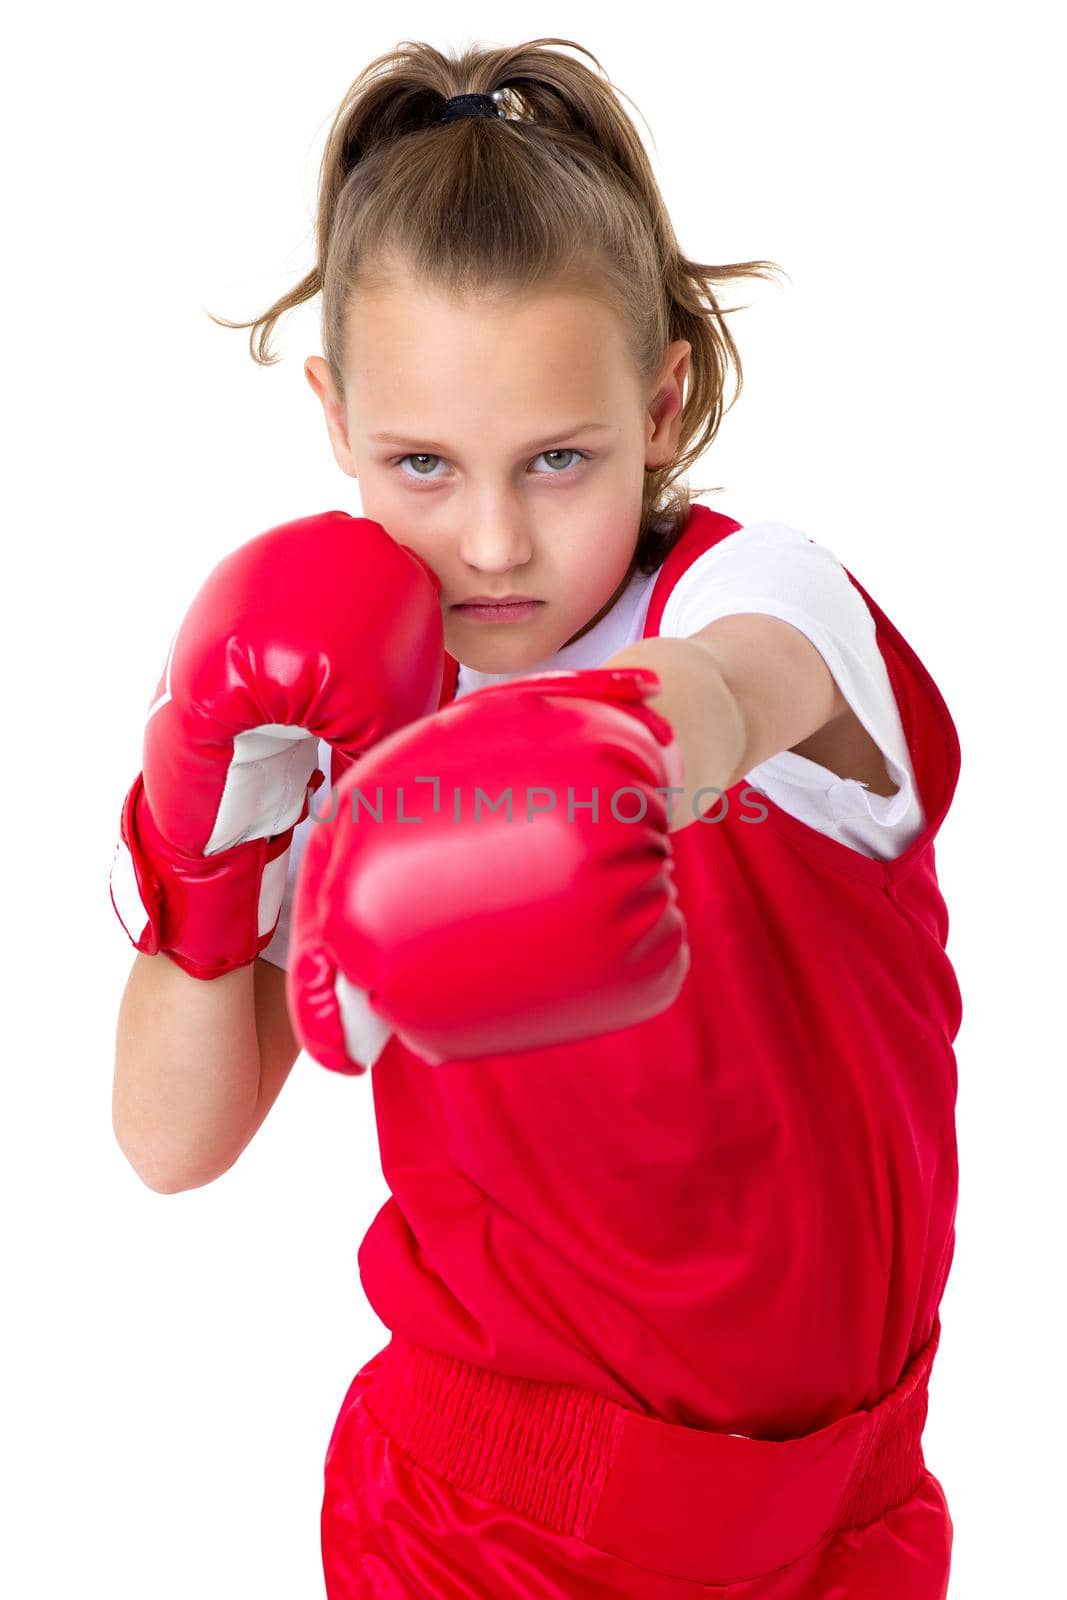 Preteen girl boxing with red gloves by kolesnikov_studio